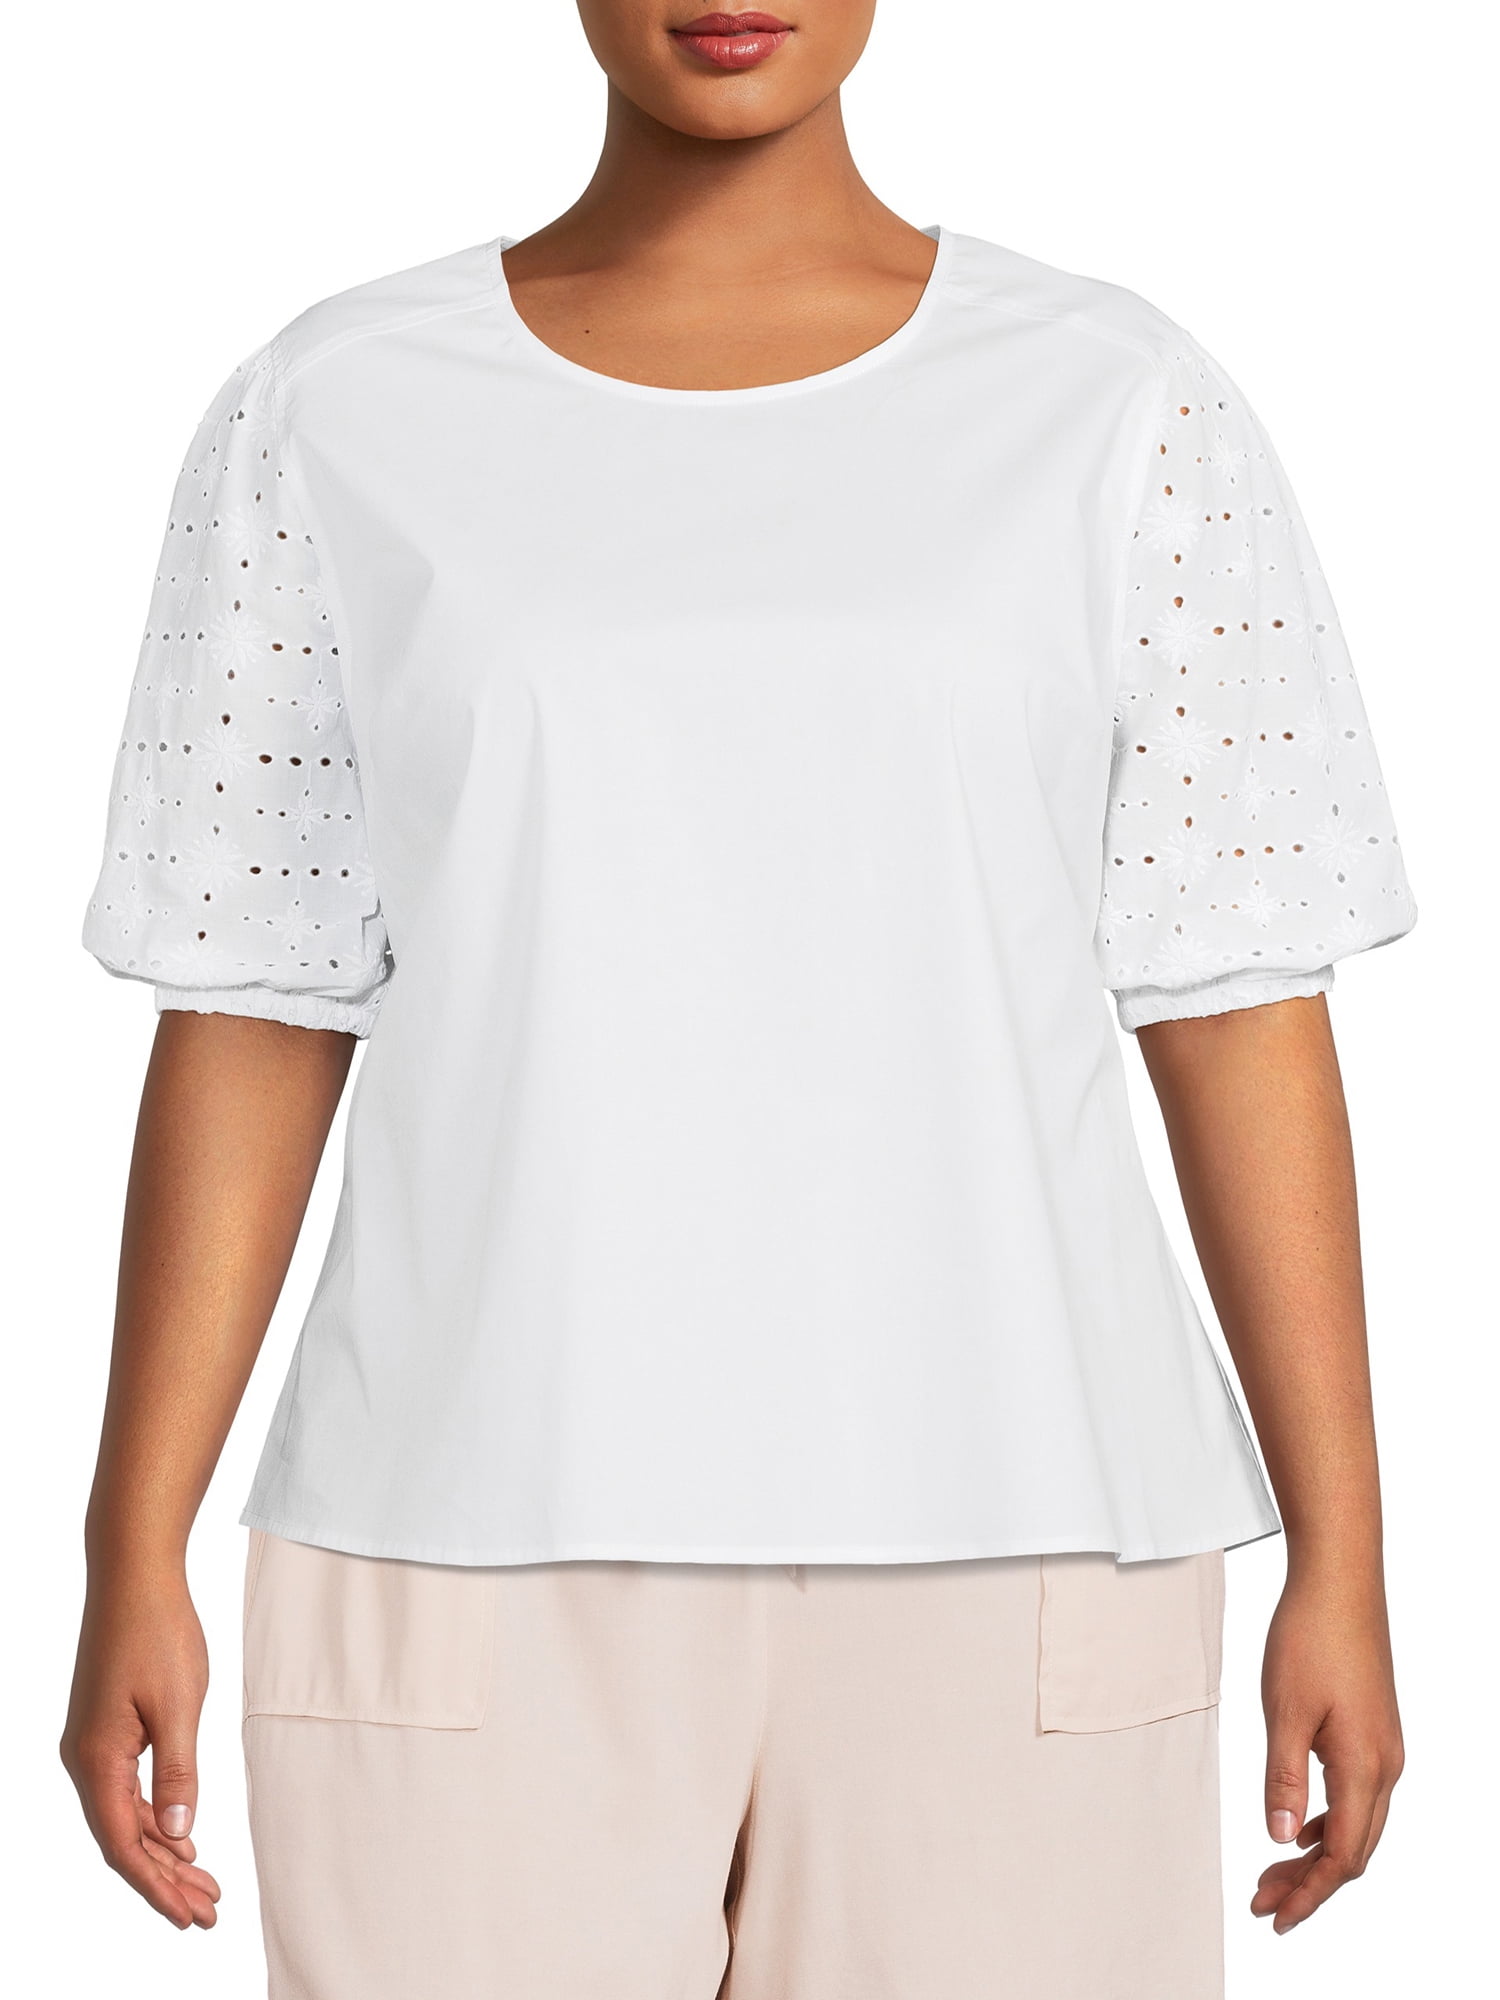 Women Embroidery Shirt Tops Eyelets Summer Short Sleeve Blouse T-Shirt Plus Size